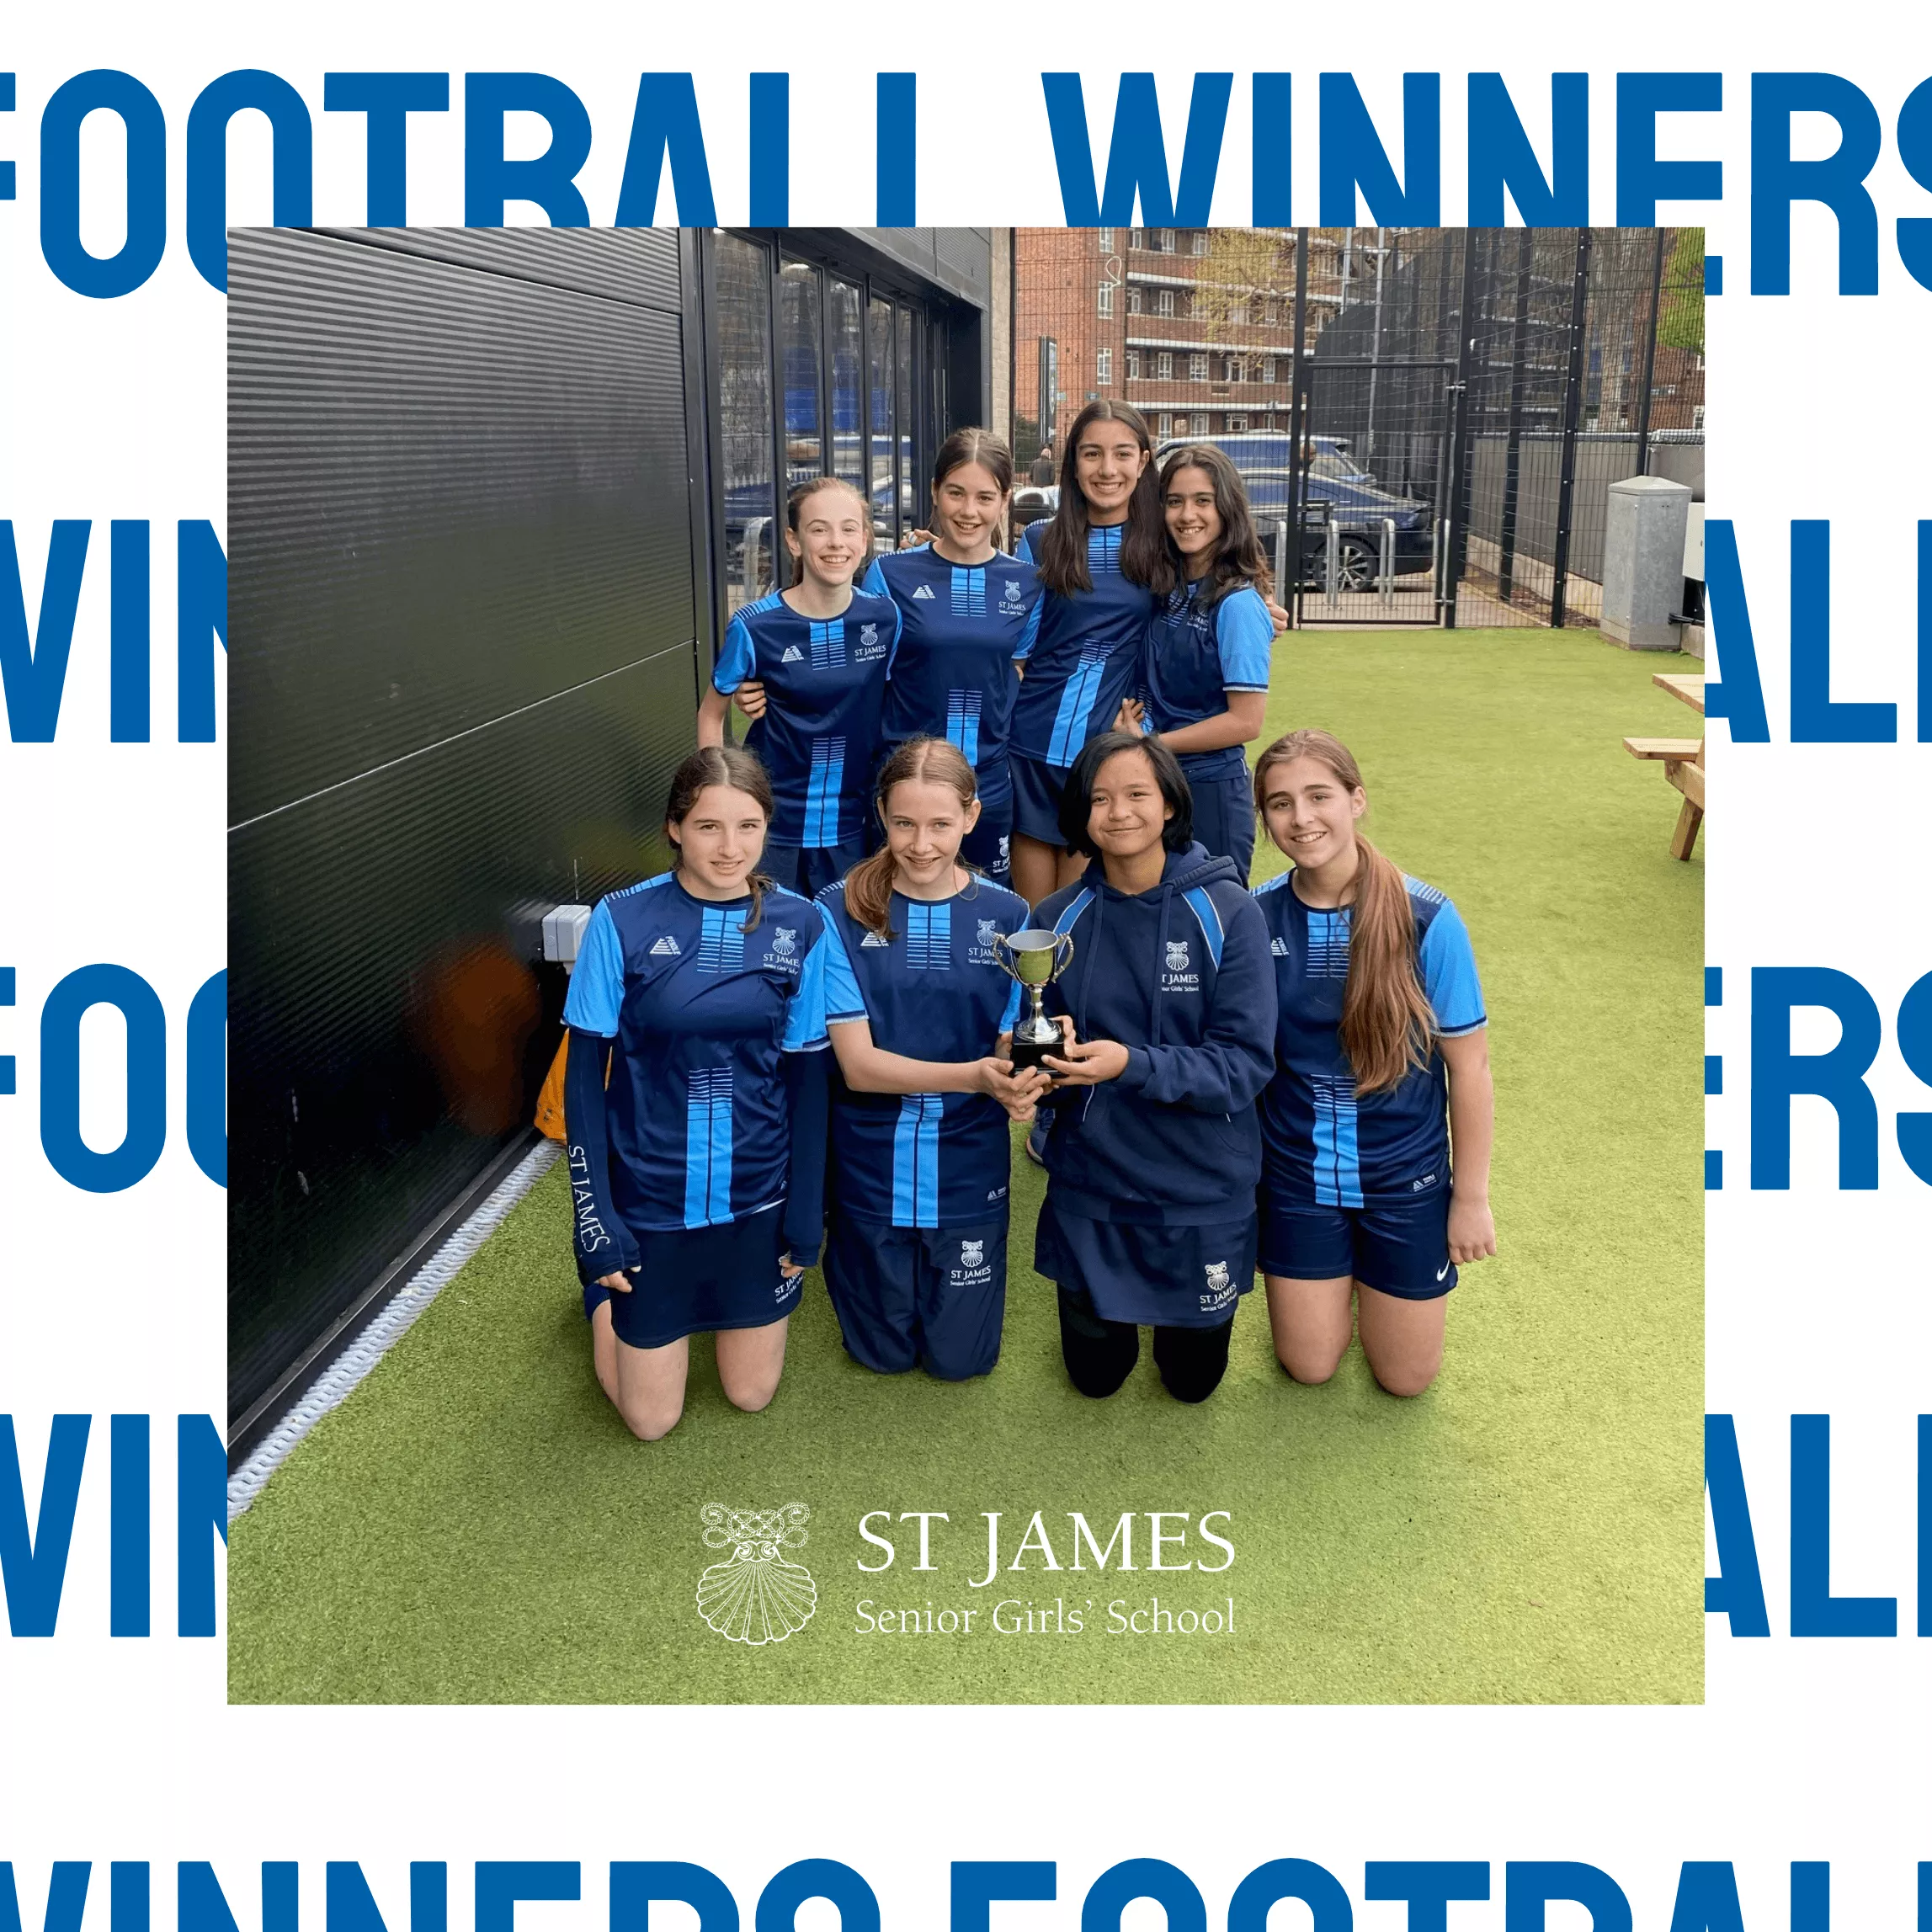 Our St James Senior Girls’ School Football team is on a winning streak!